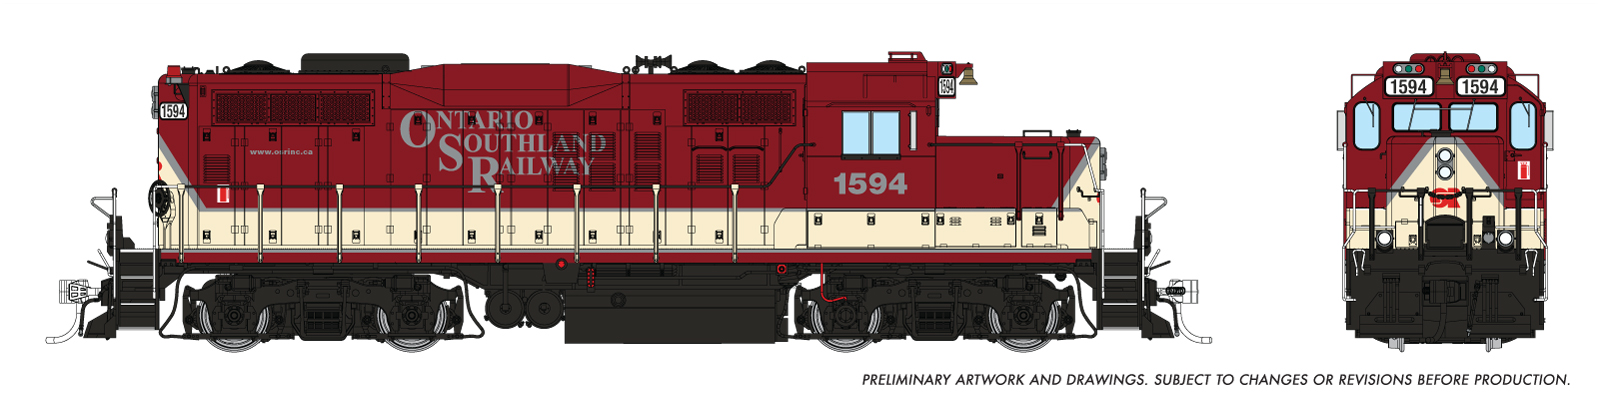 Rapido 54026 - HO GP9u - DC/Silent - Ontario Southland Railway #1594 - Otter Valley Railroad Exclusive